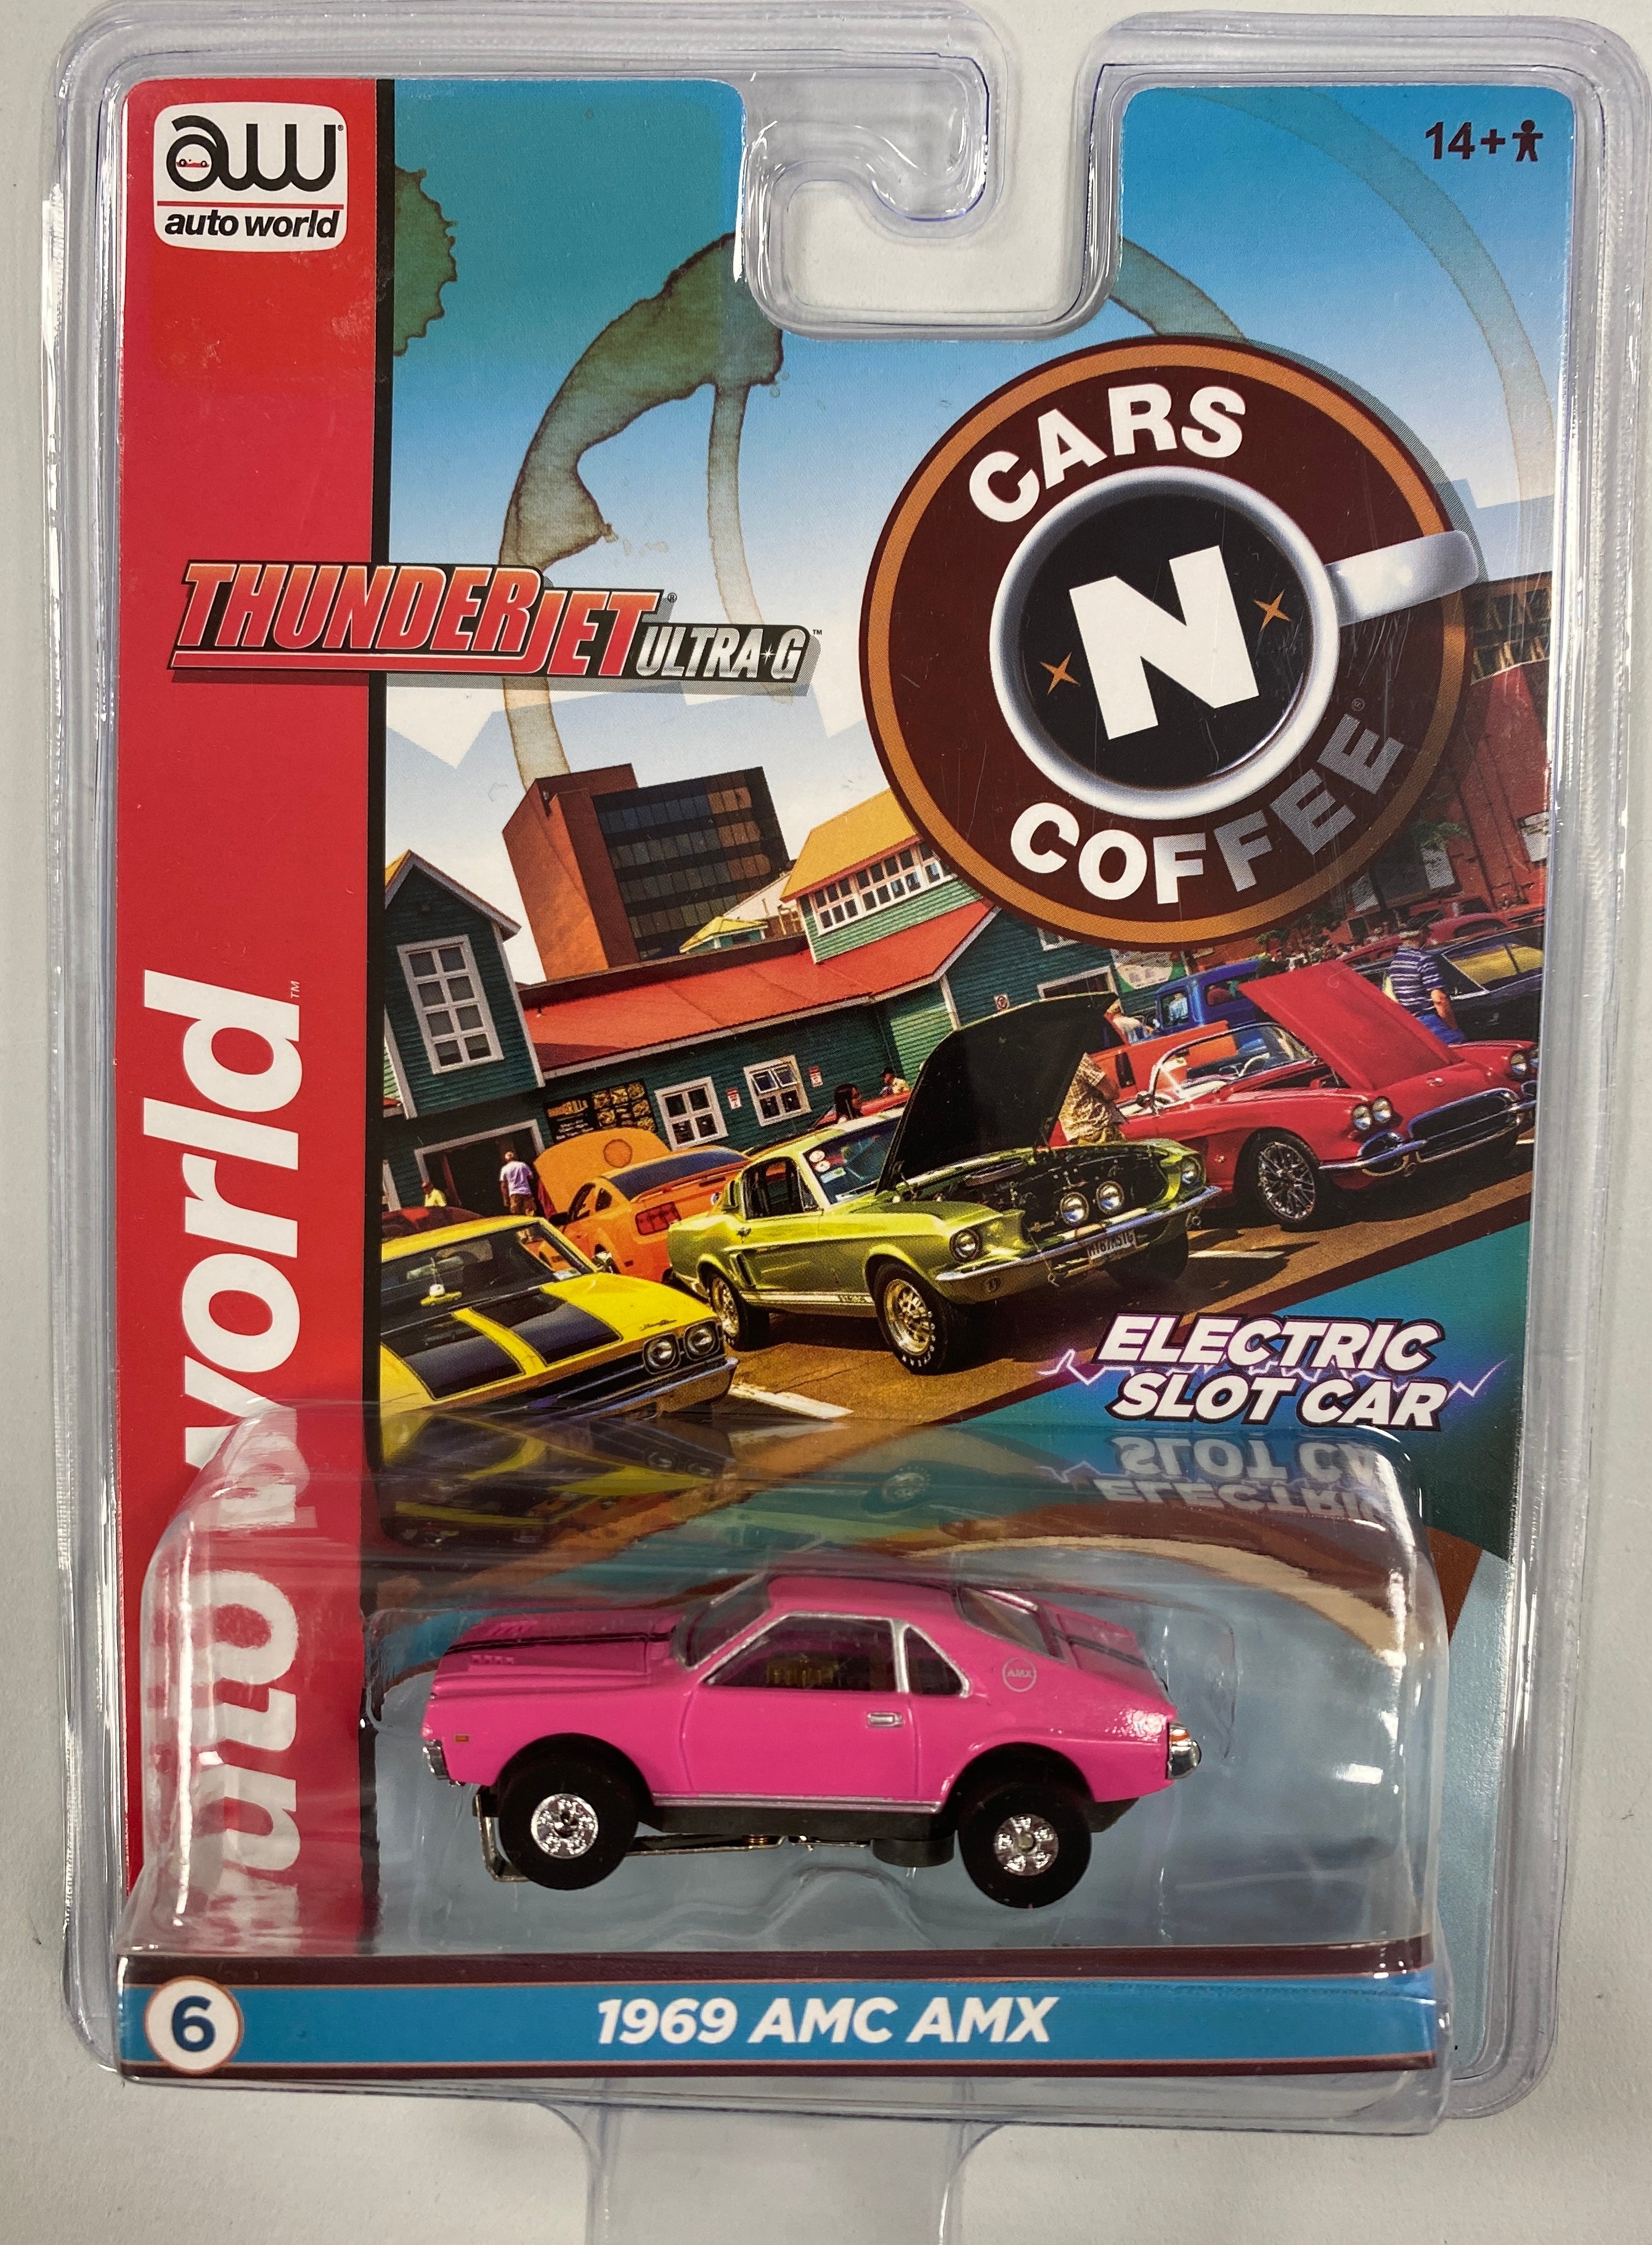 AWDSC360-6P: Pink 1969 AMC AMX Cars N Coffee